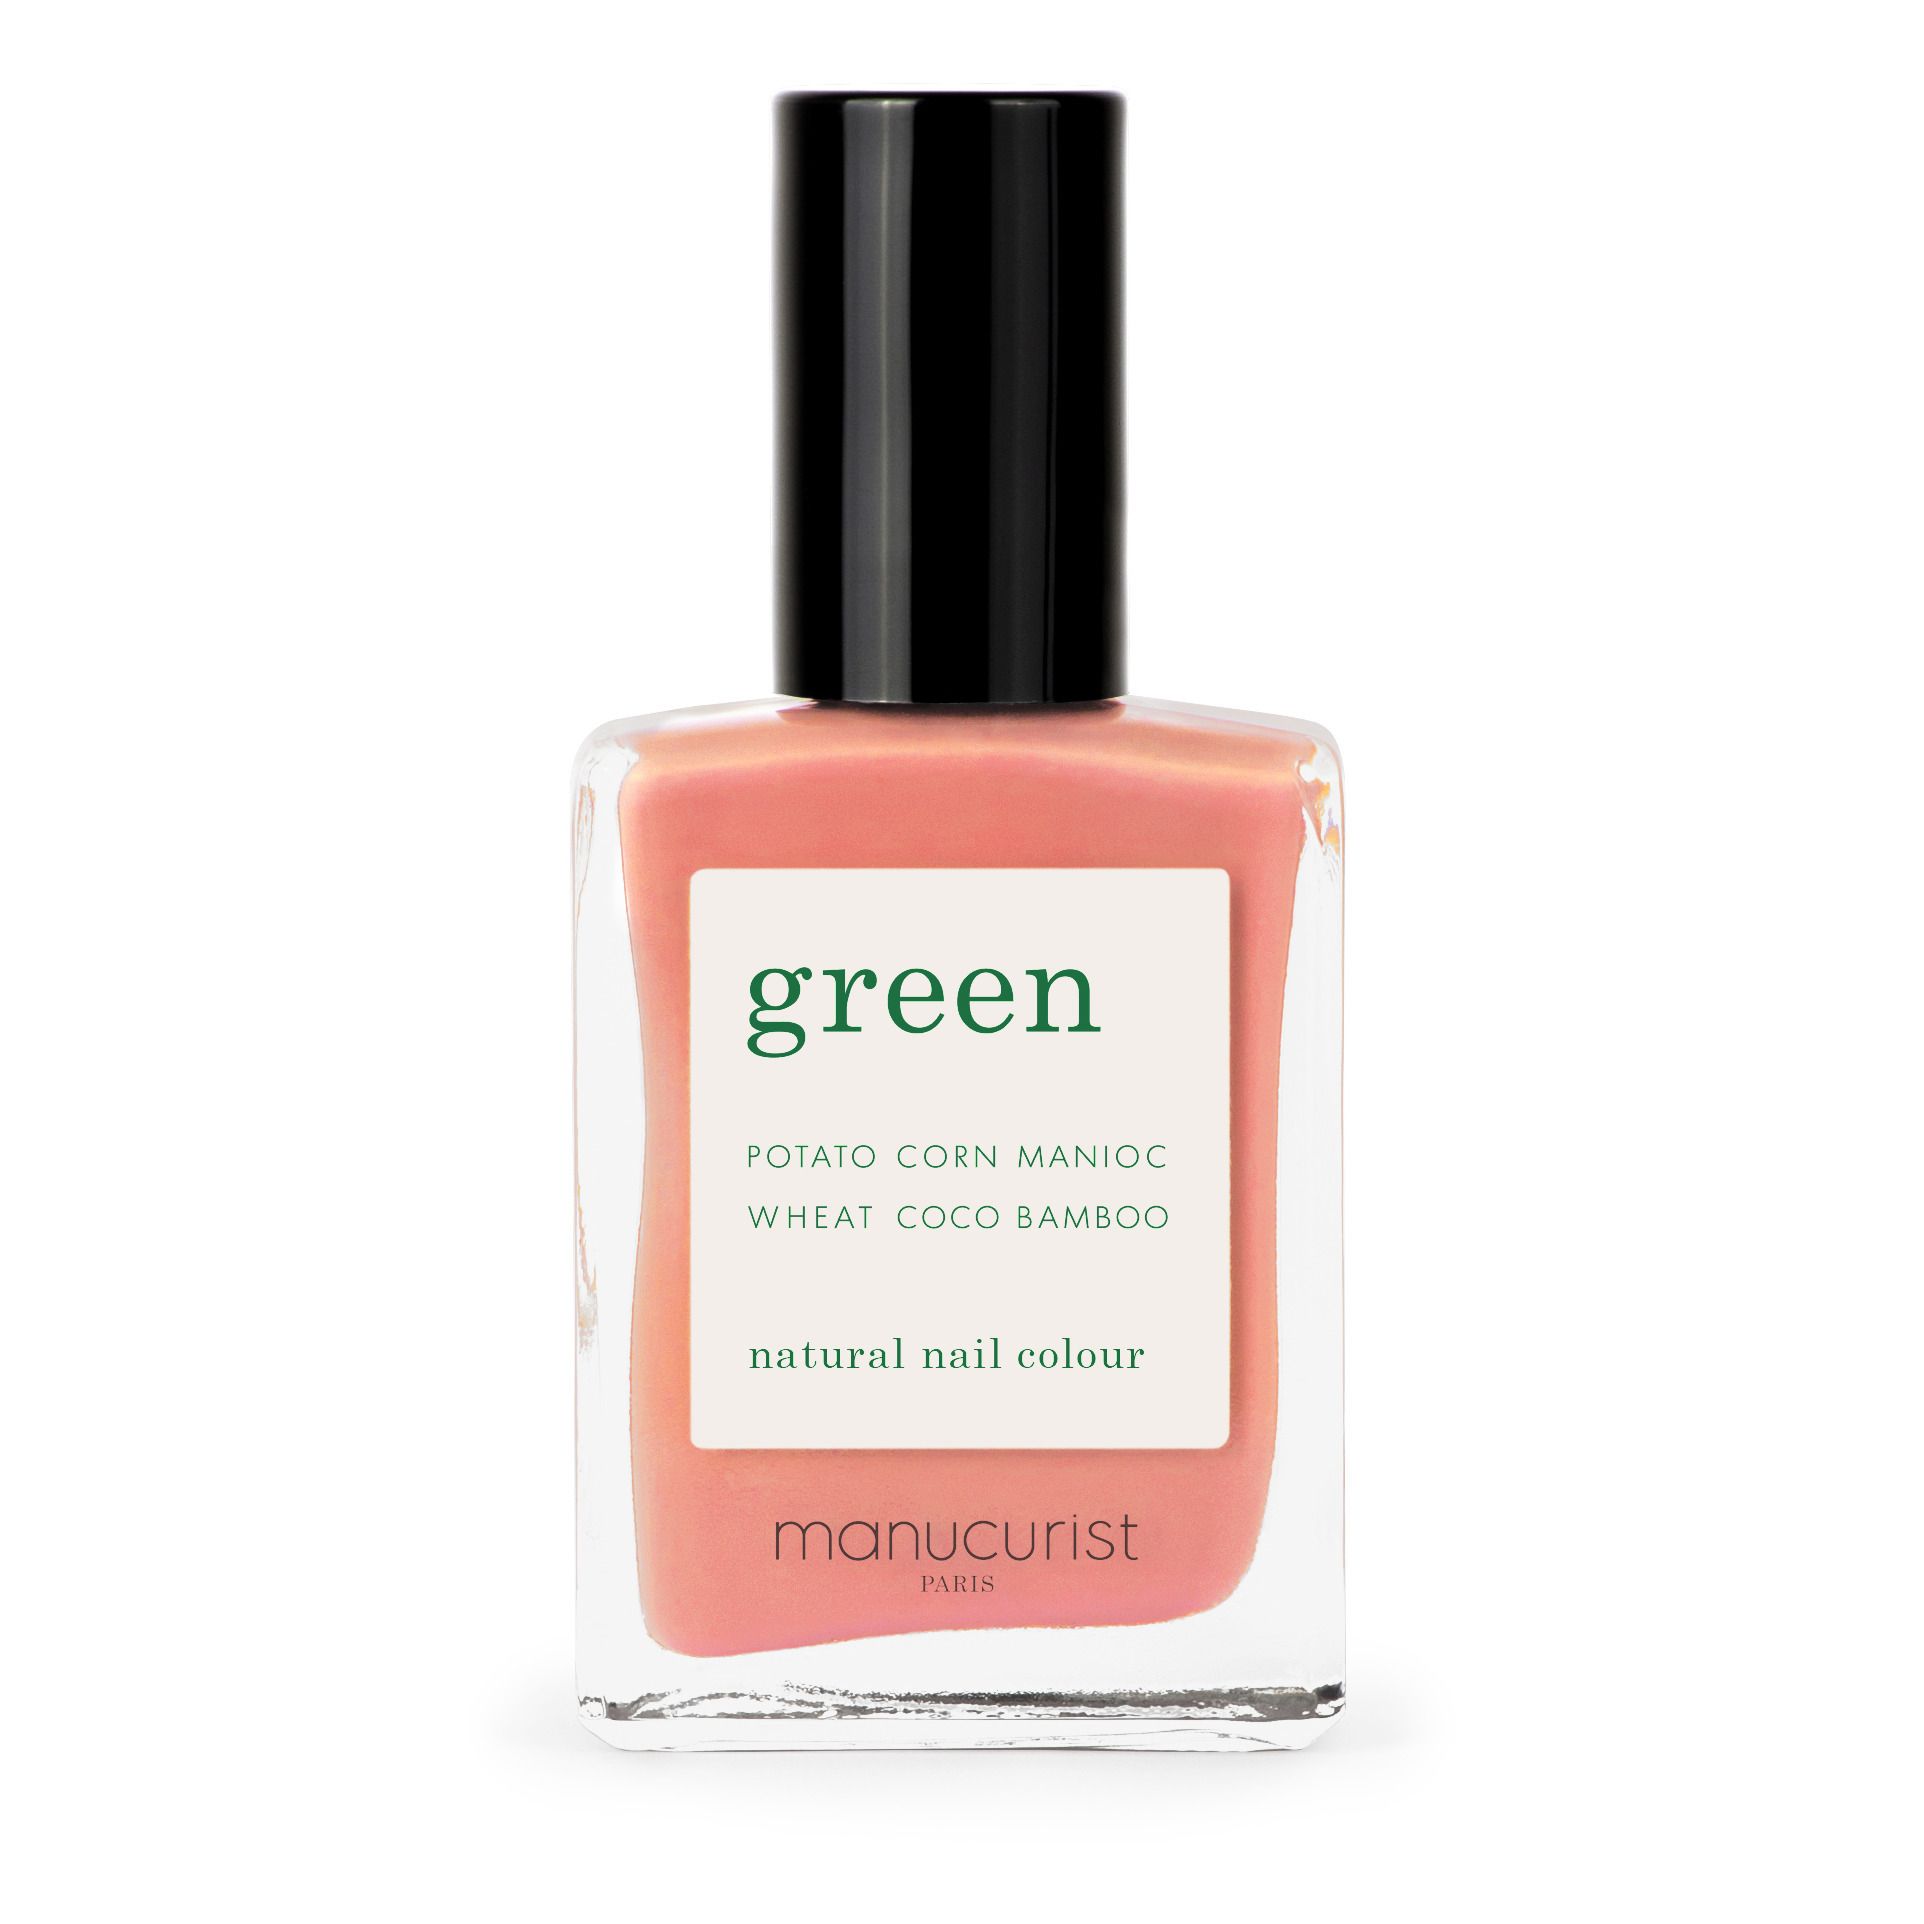 Vernis à ongles Green - 15 ml (Manucurist) - Image 1